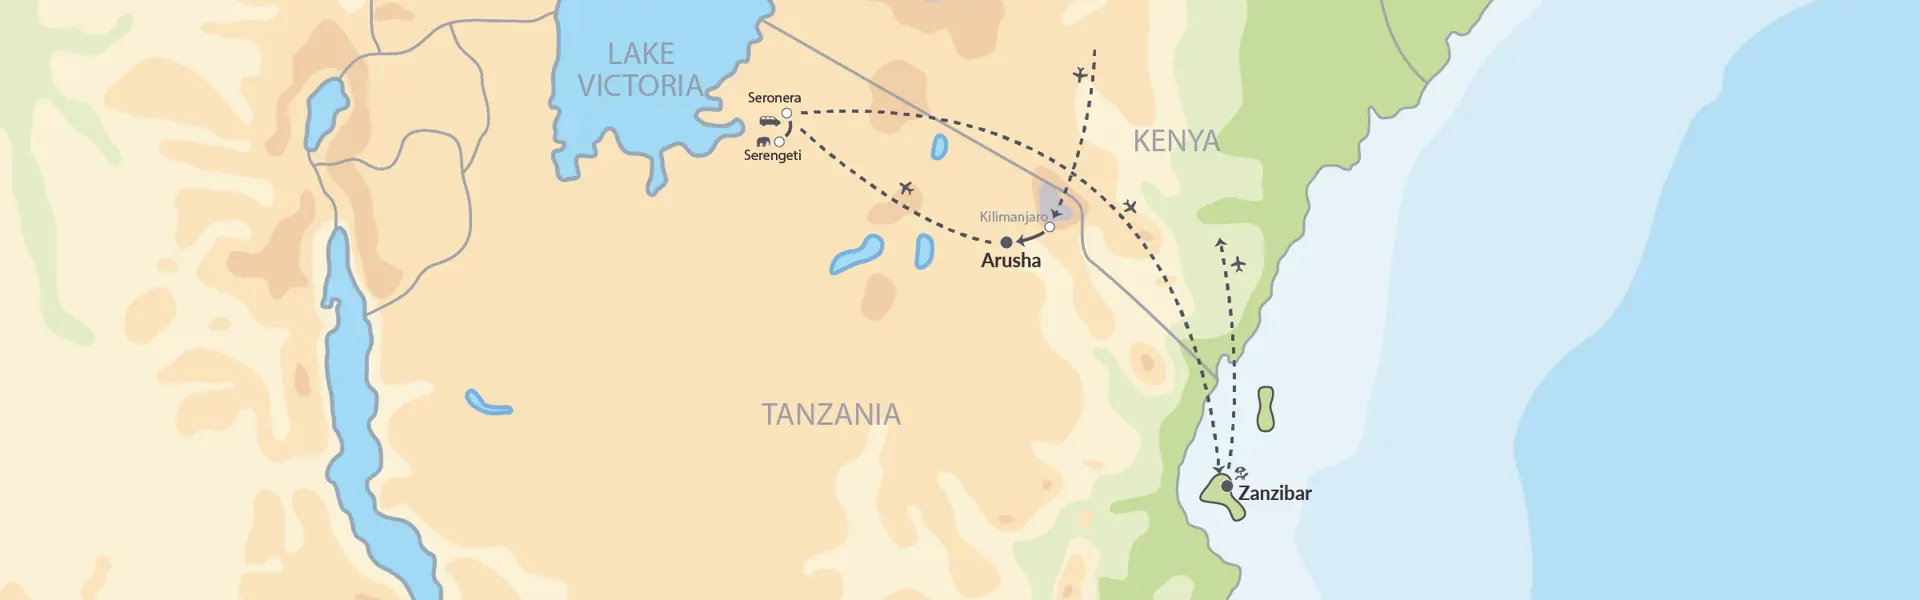 58339 Luksussafari I Tanzania Og Badeferie På Zanzibar Map